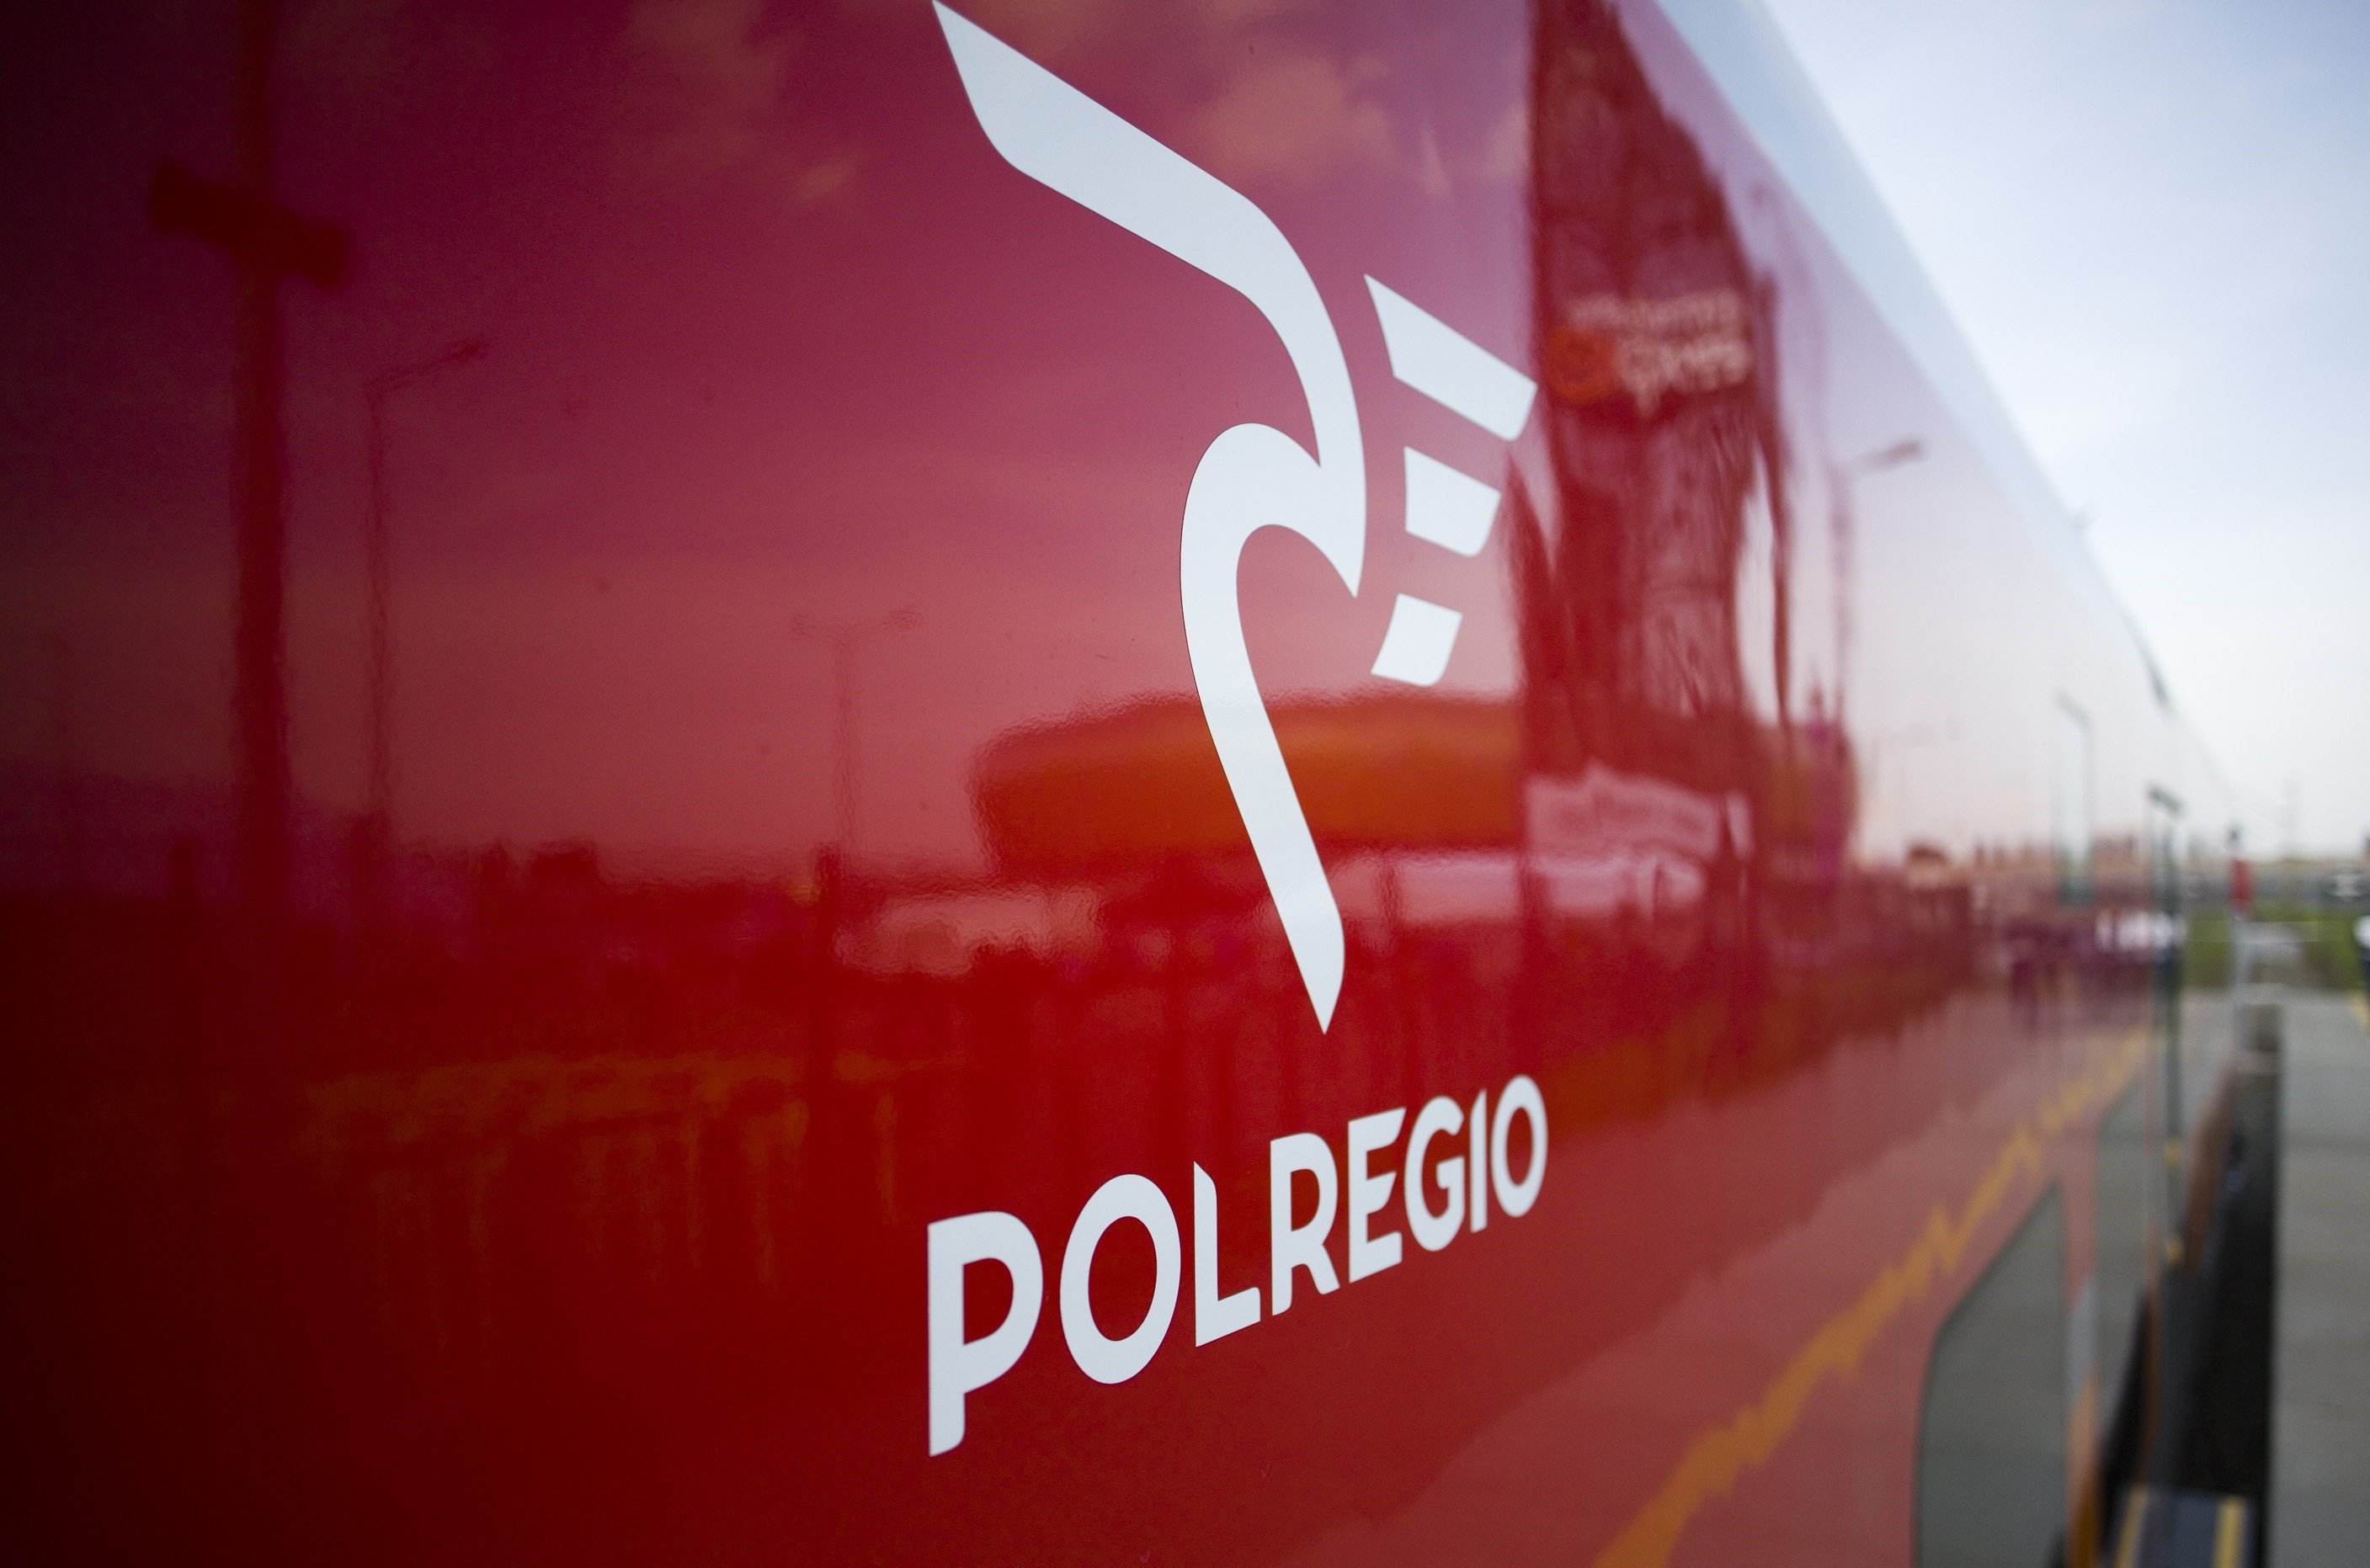 1 POLREGIO_logo.original.jpg